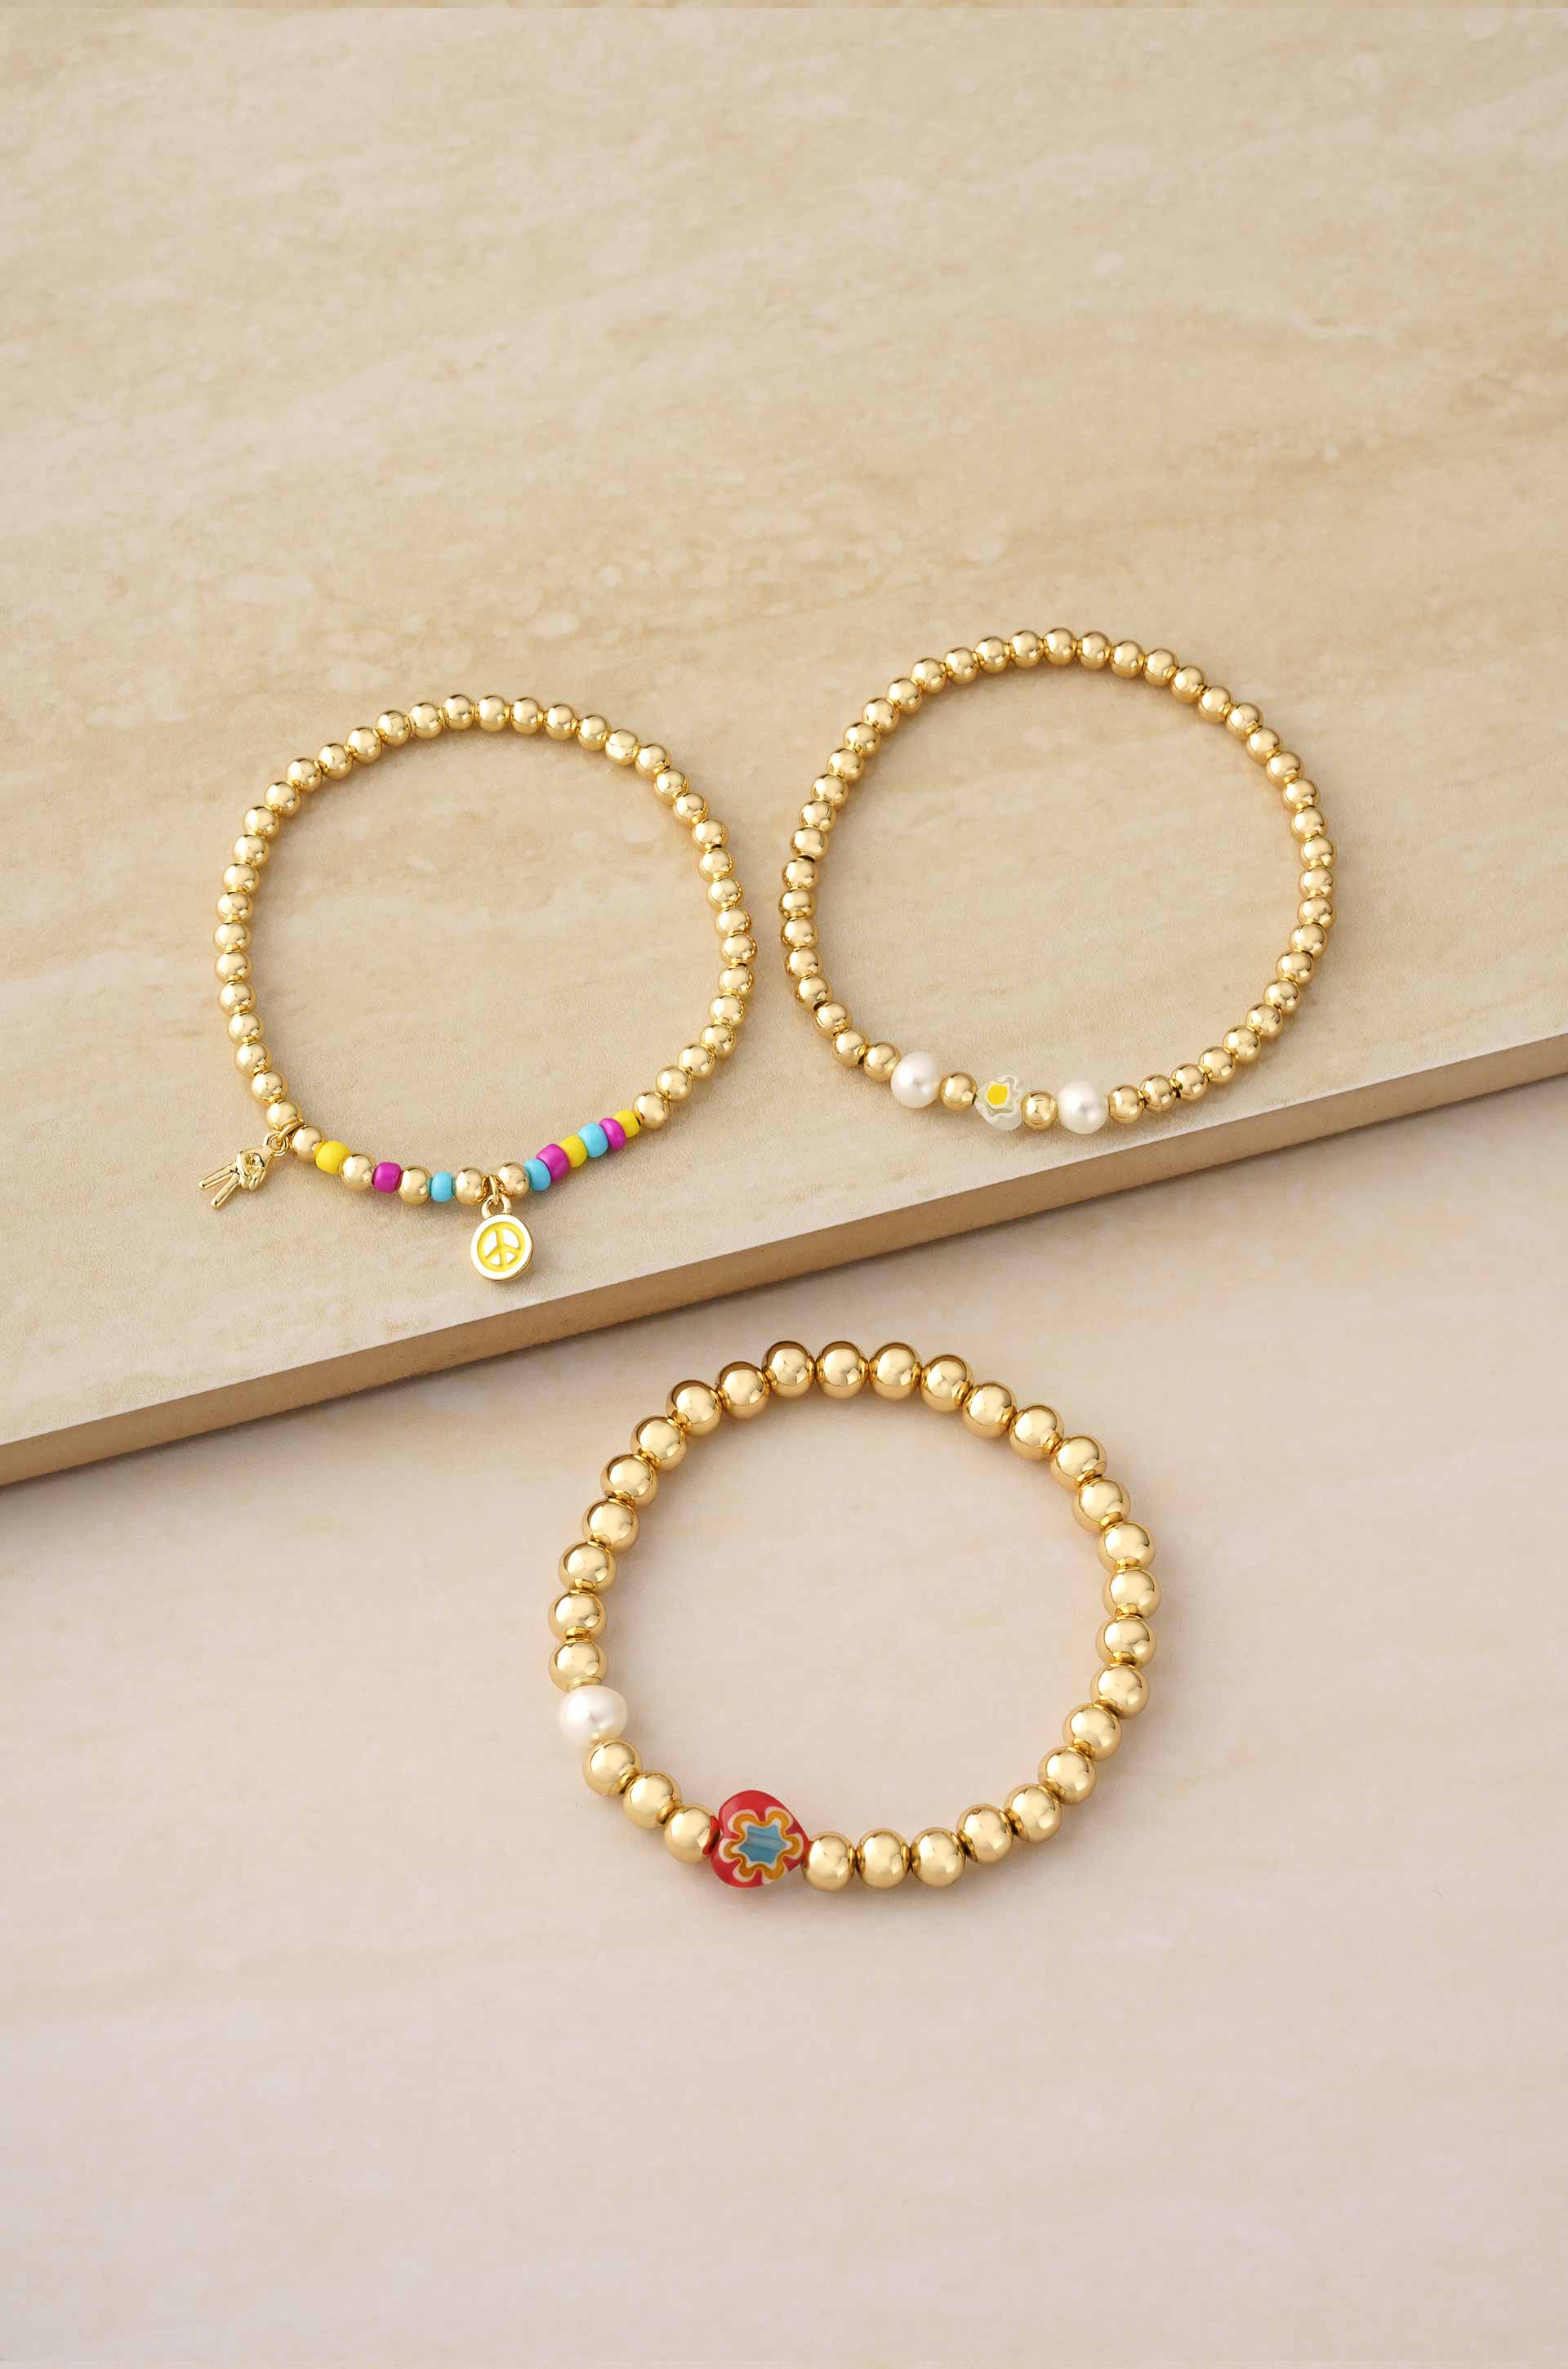 The Good Vibes DIY Stretchy Bracelet Jewelry Making Bead Kit